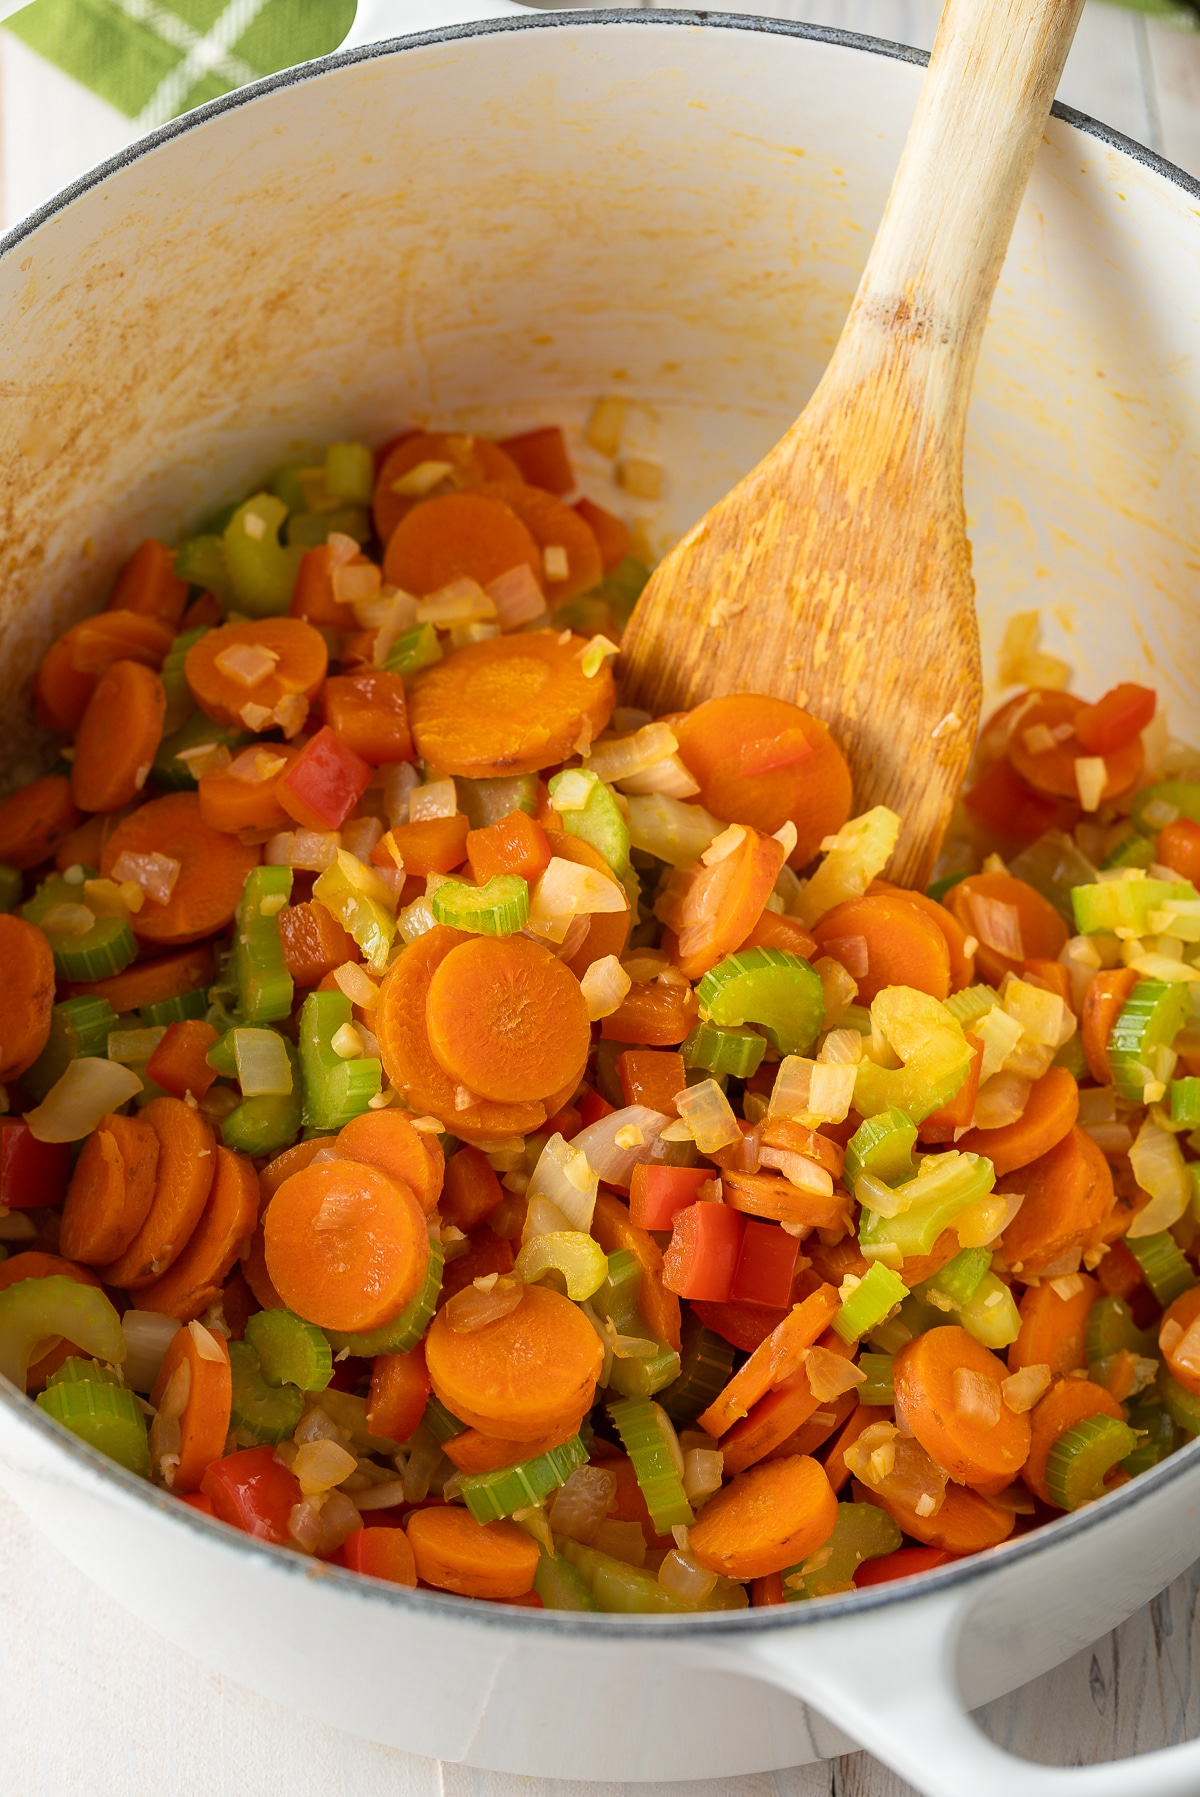 How to make navy bean soup recipe #ASpicyPerspective #vegetarian #vegan # soy #soup #glutenfree #dairyfree